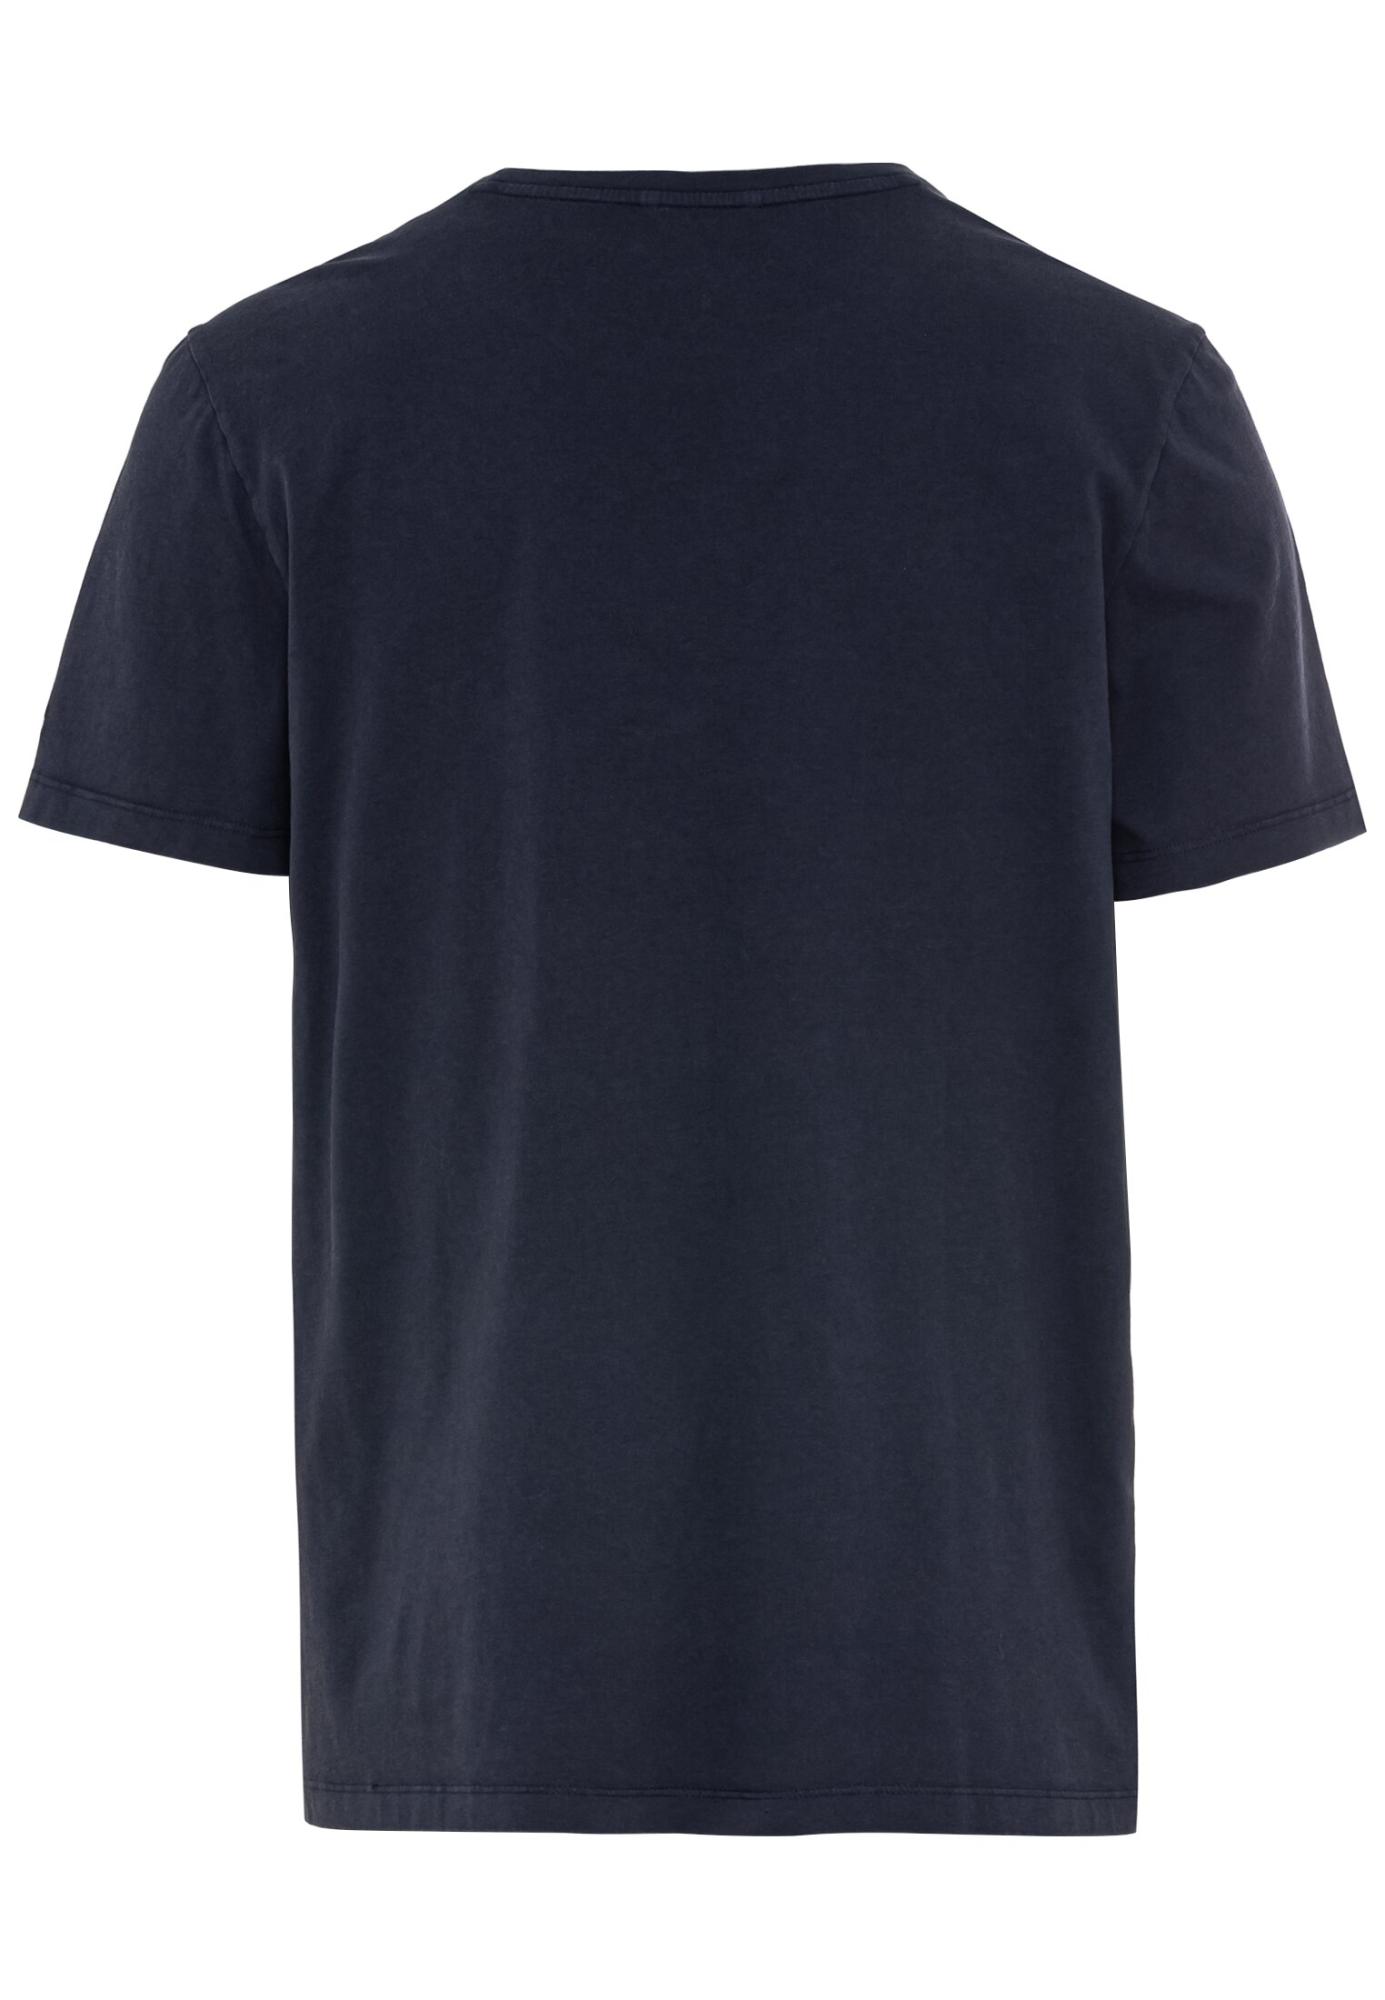 Мужская футболка Camel Active, синяя, цвет синий, размер 50 - фото 1